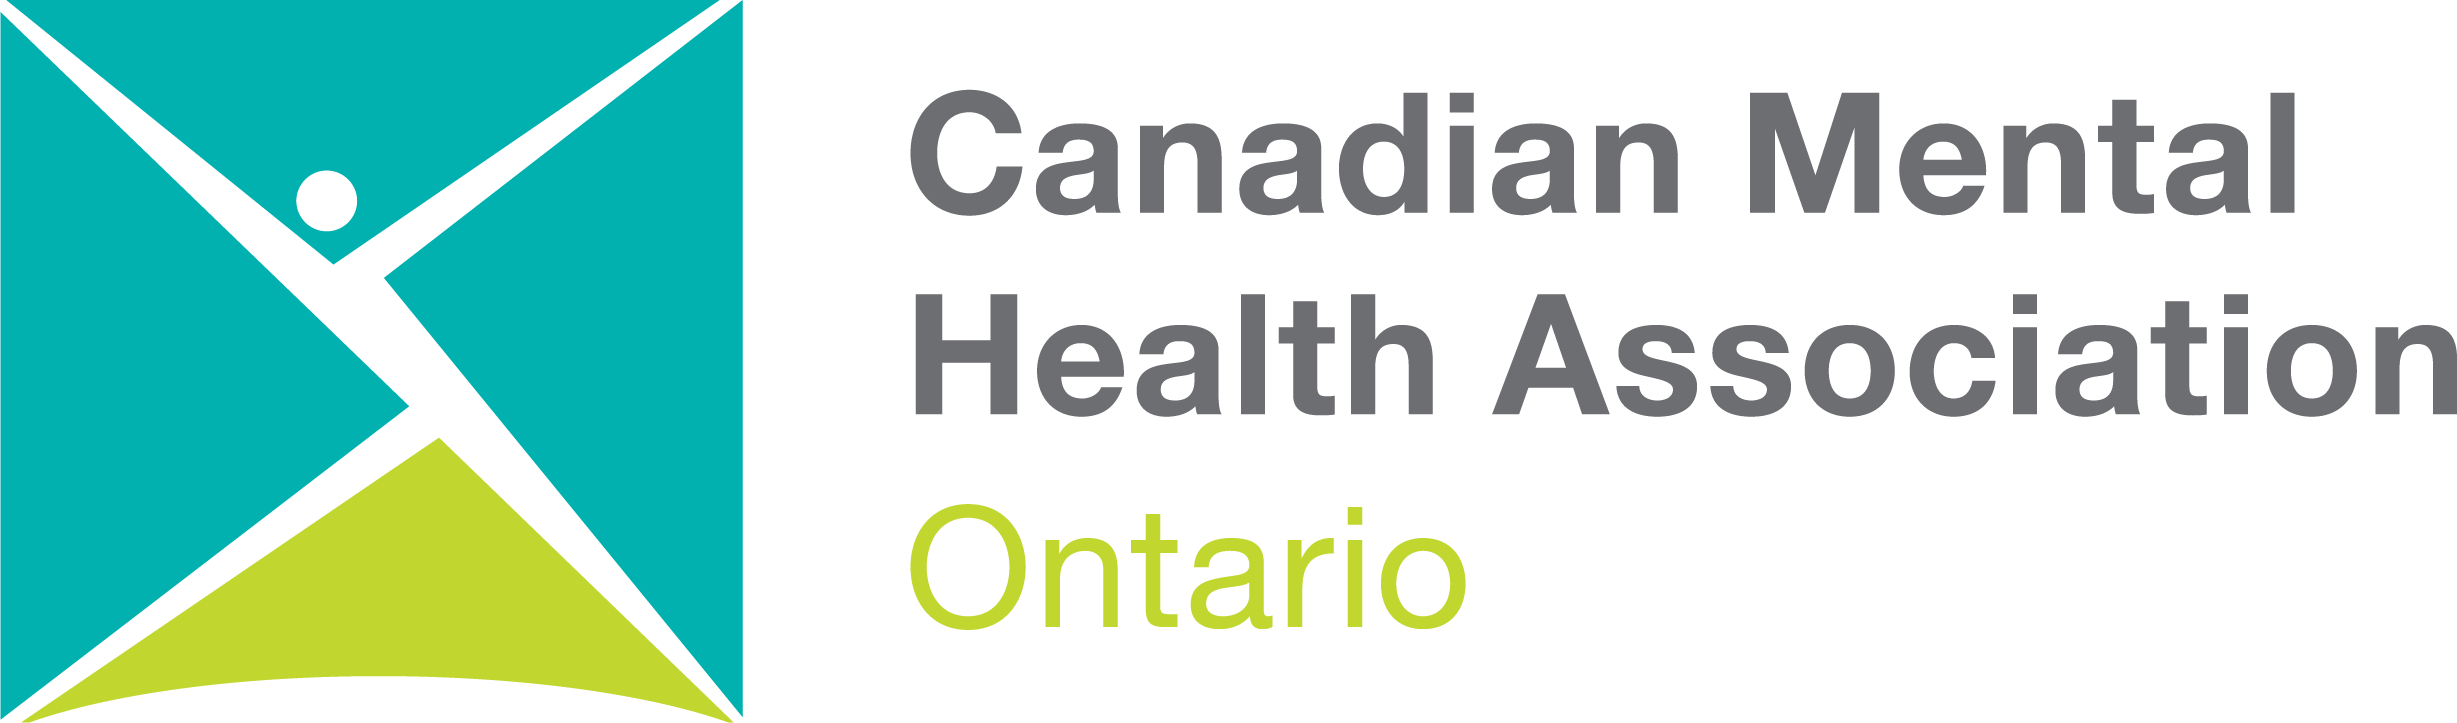 CANADIAN MENTAL HEALTH ASSOCIATION ONTARIO DIVISION